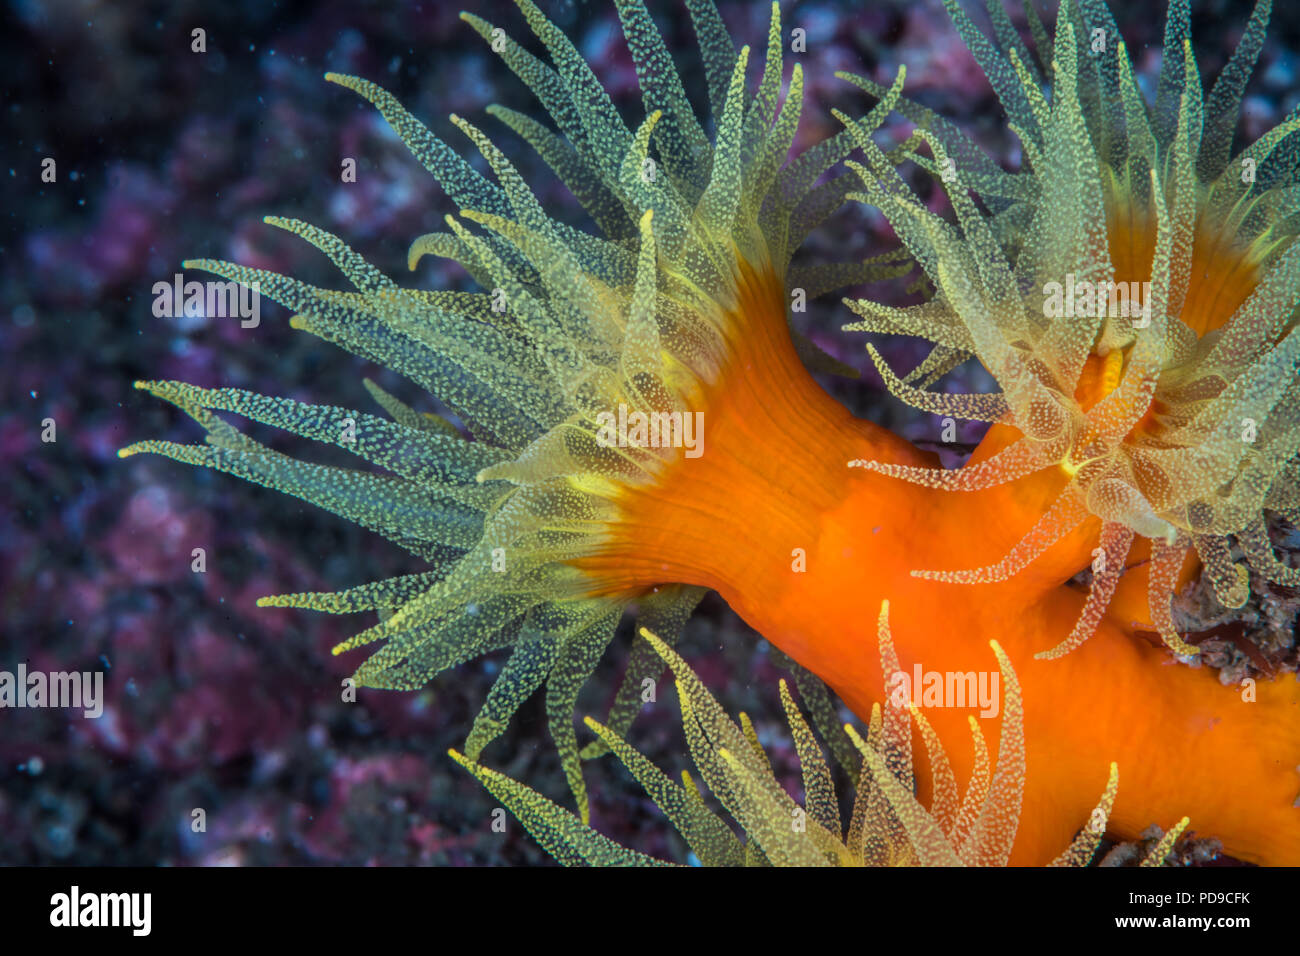 Orange cup coral, Dendrophyllia ijimai Yabe & Eguchi, 1934, spreading its translucent tentacles. Owase, Mie, Japan. -18m Stock Photo